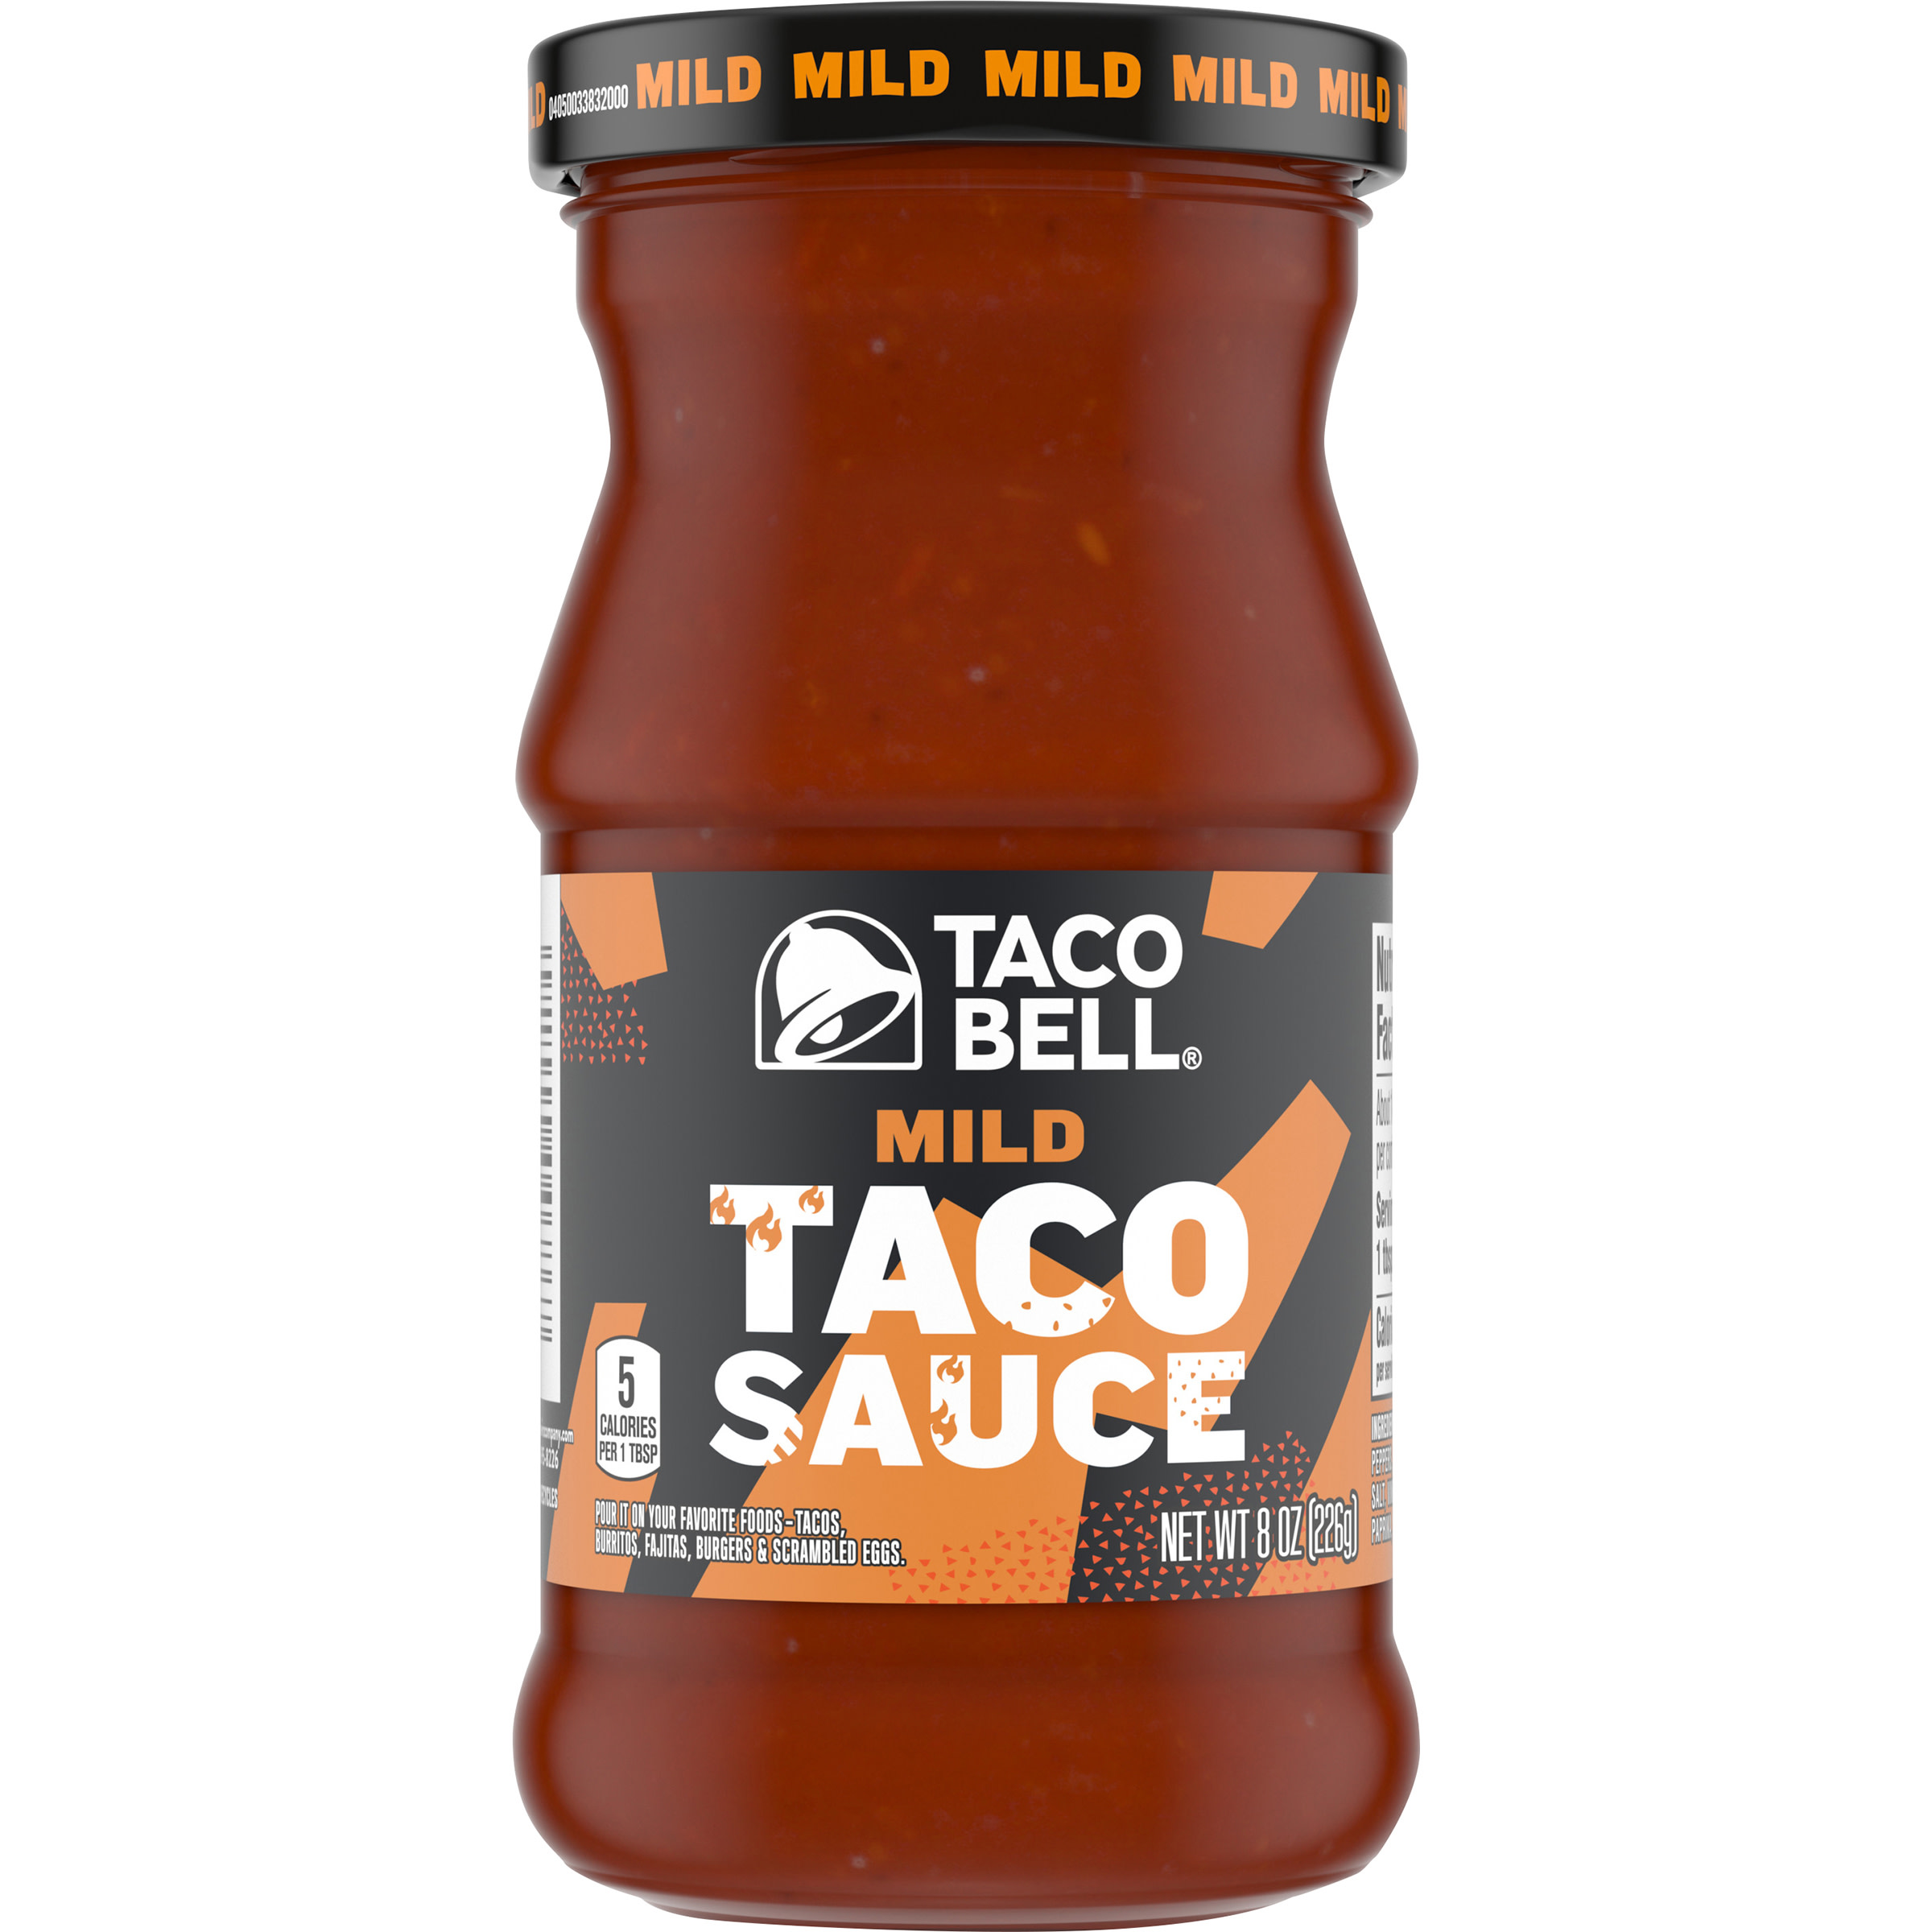 Taco Bell Mild Taco Sauce, 8 oz Bottle